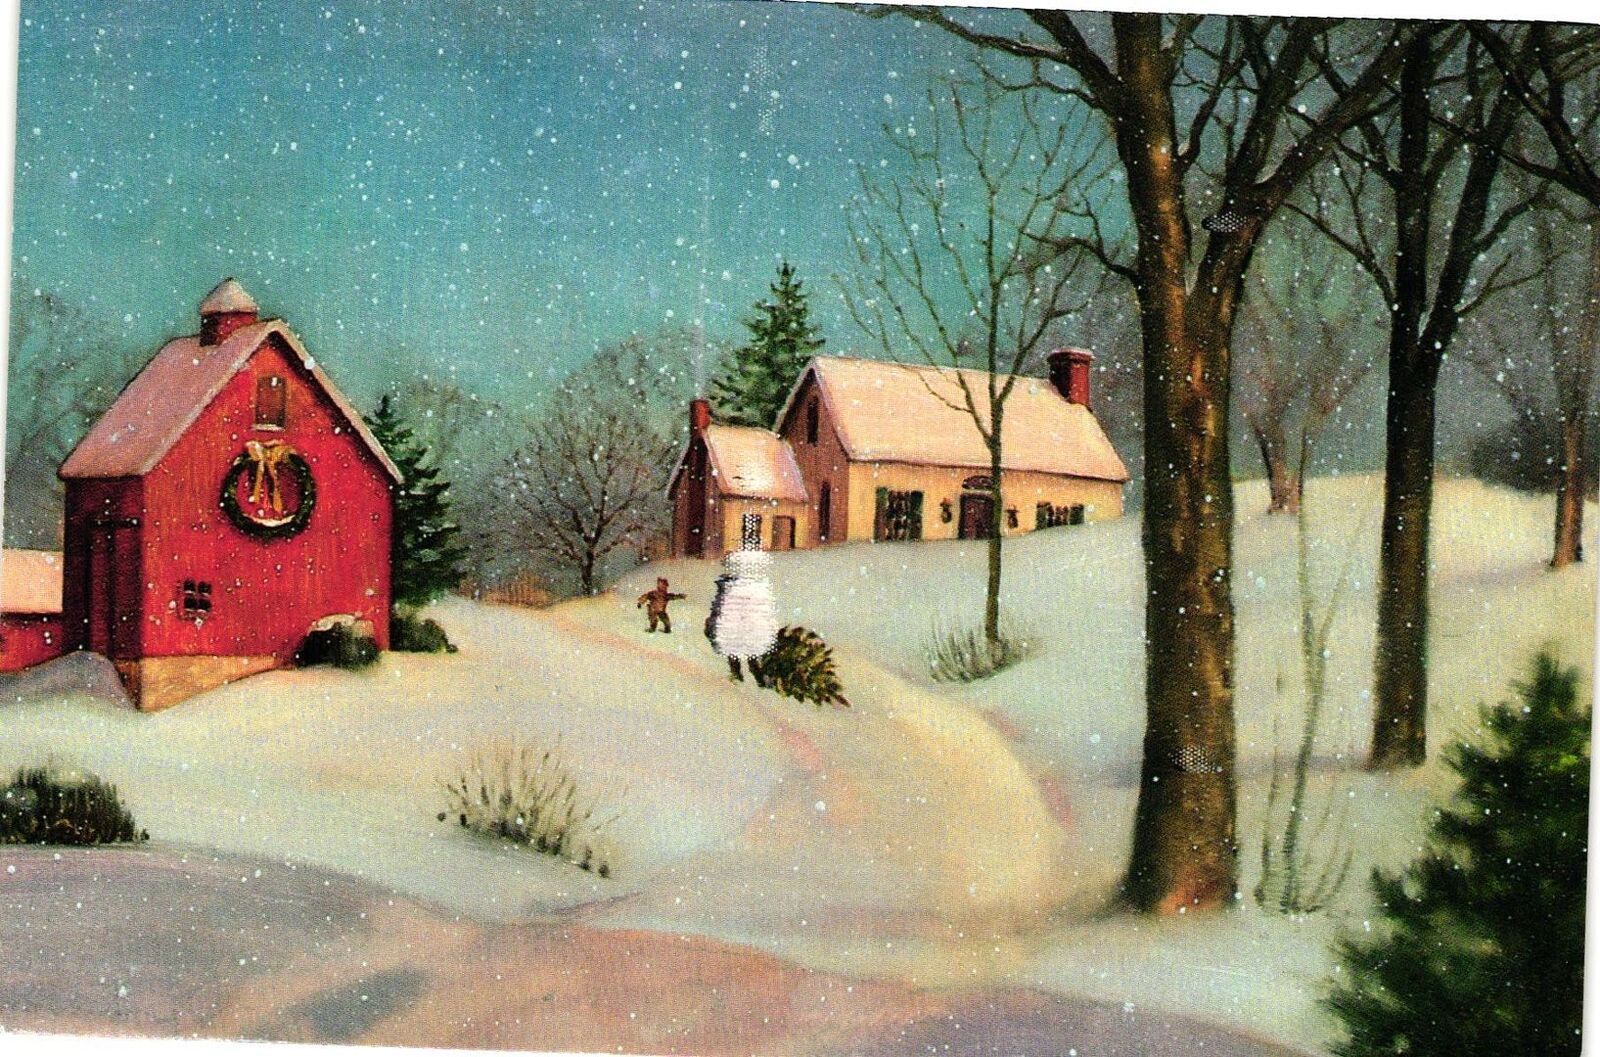 Vintage Postcard 4x6- Snow Day, Wishing you a wonderful Christmas.